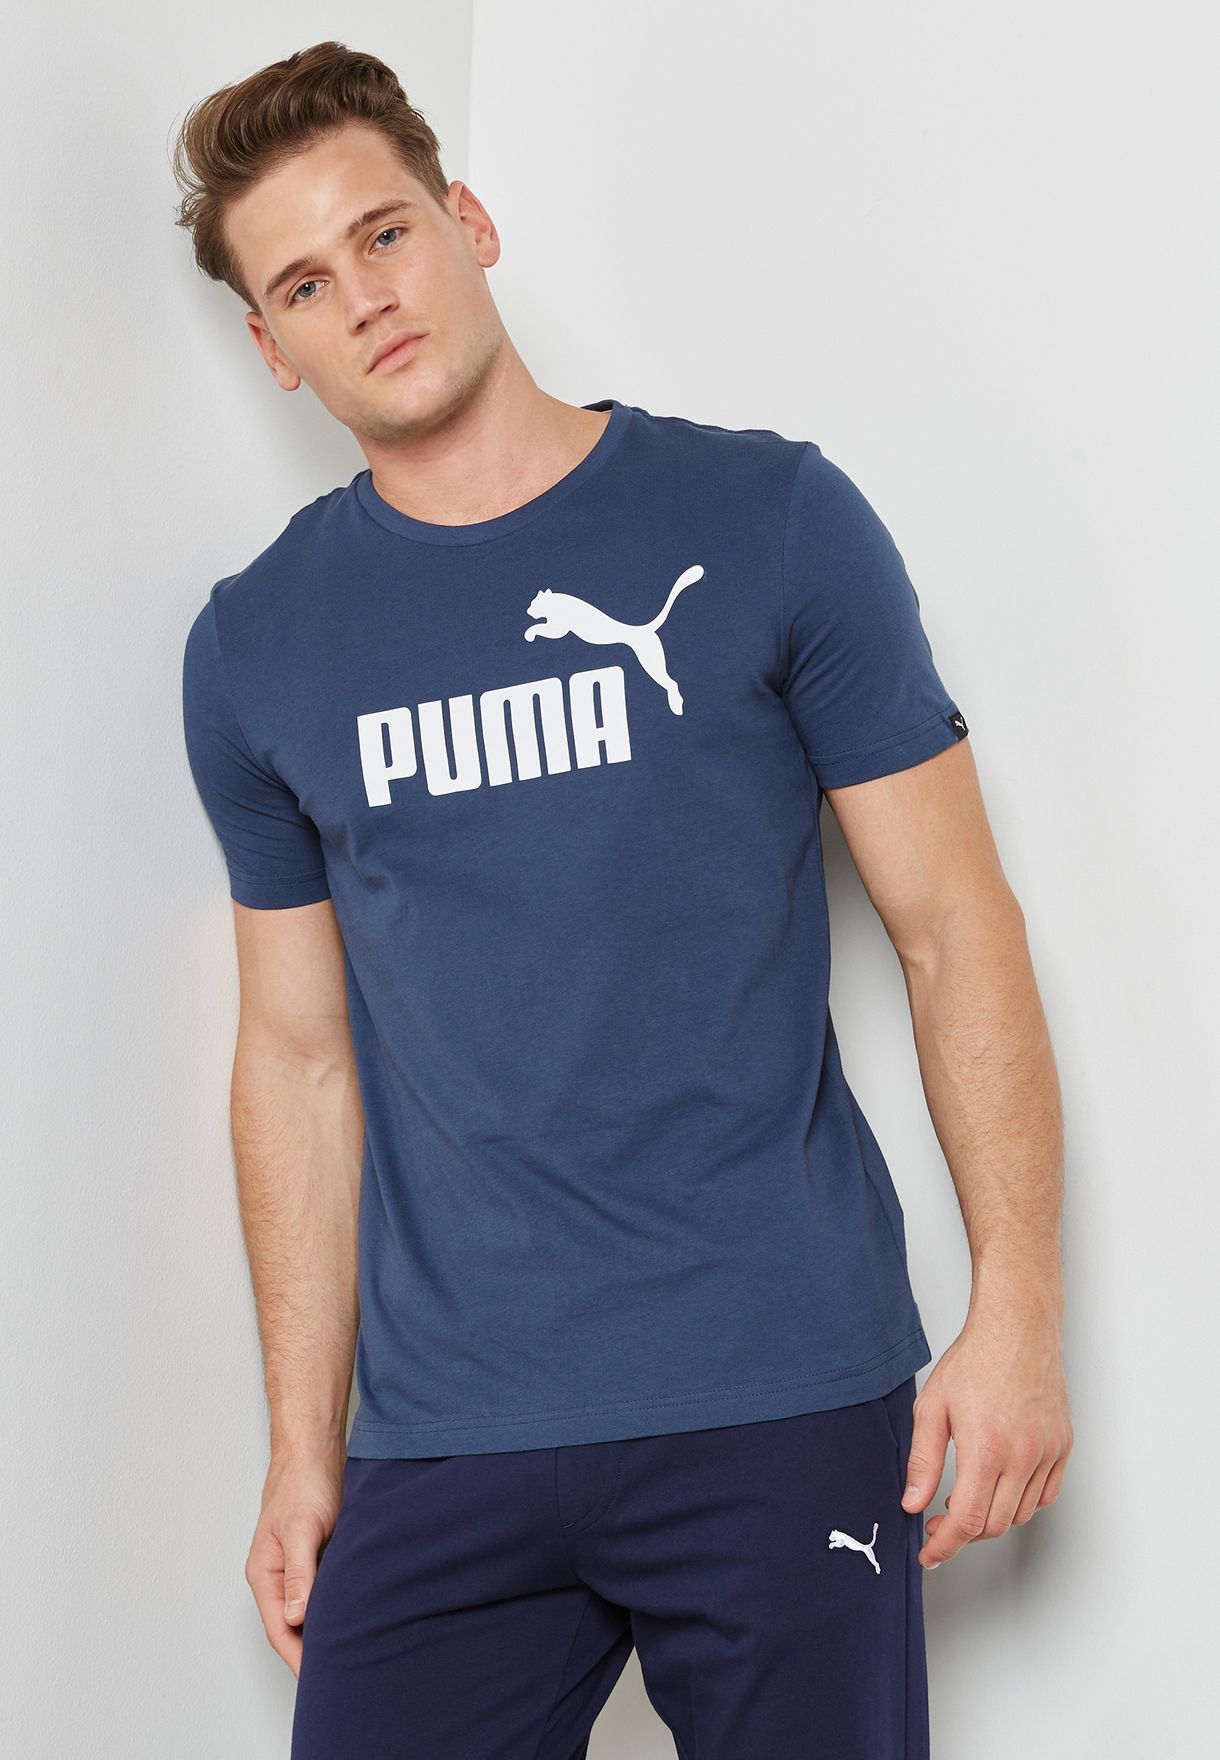 puma navy t shirt